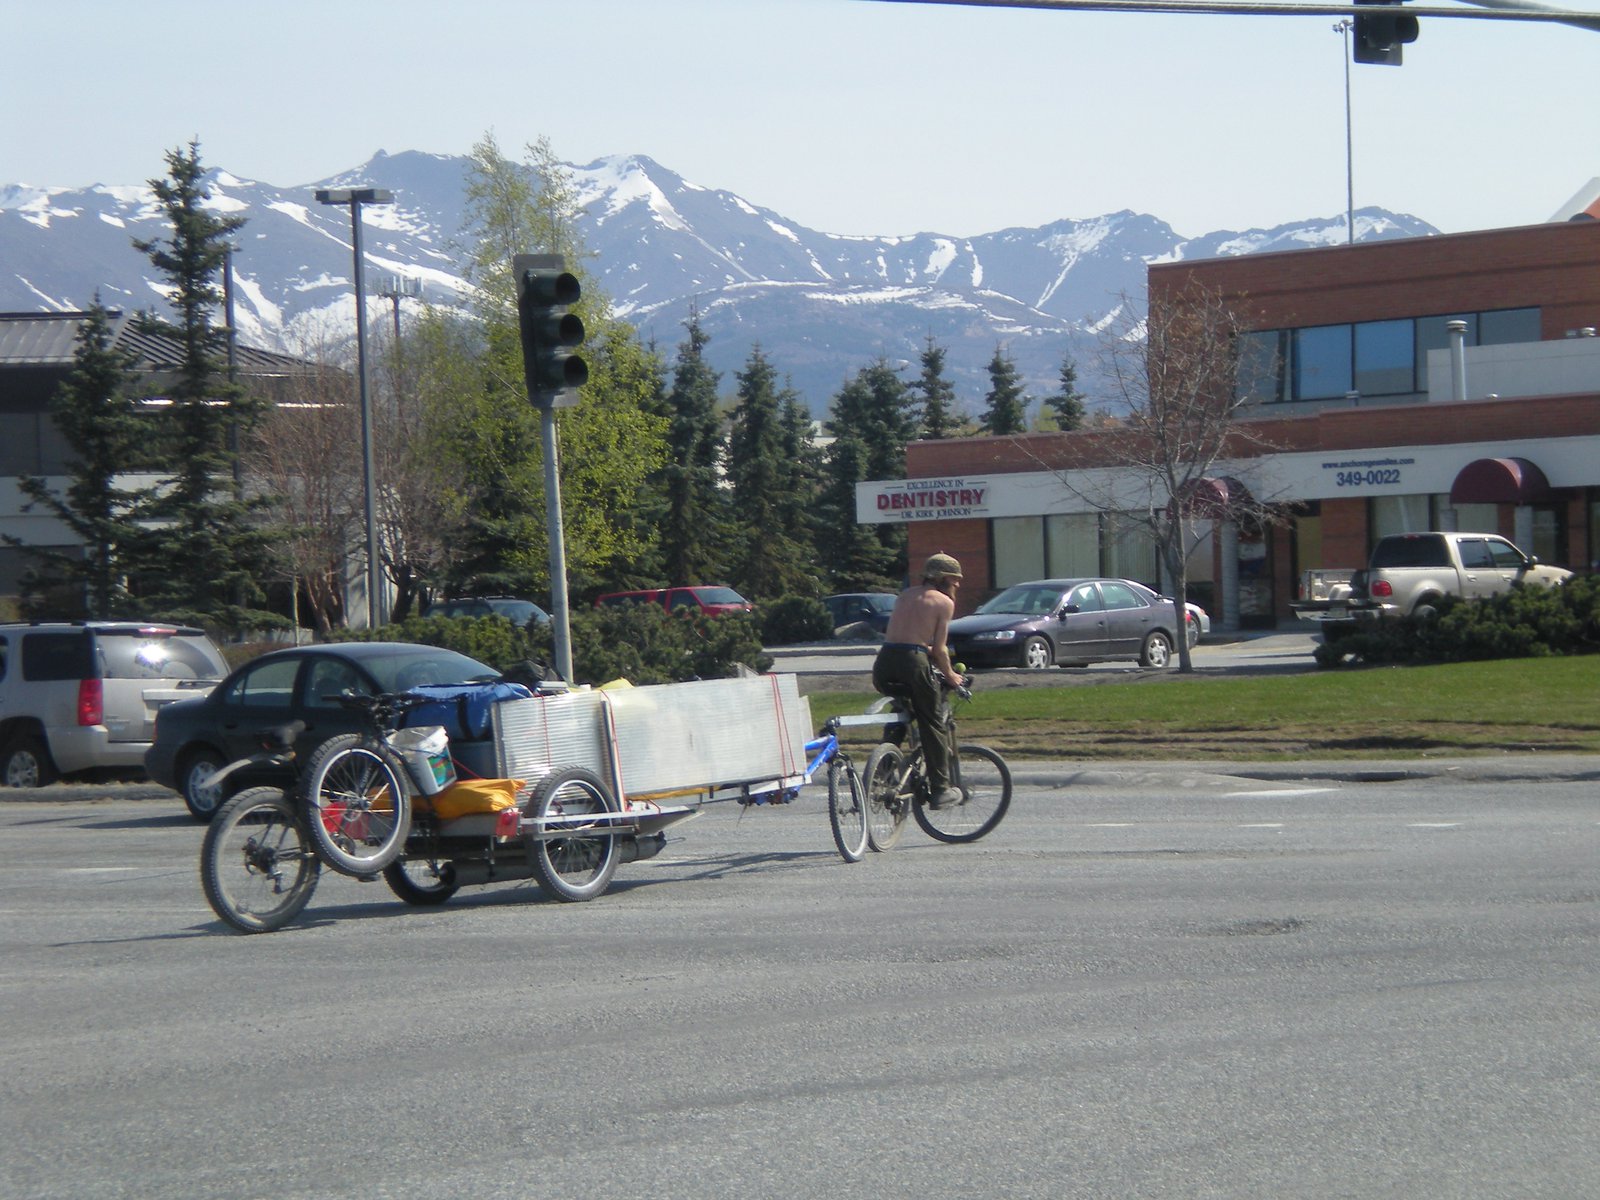 Bike trailer might be hard to push